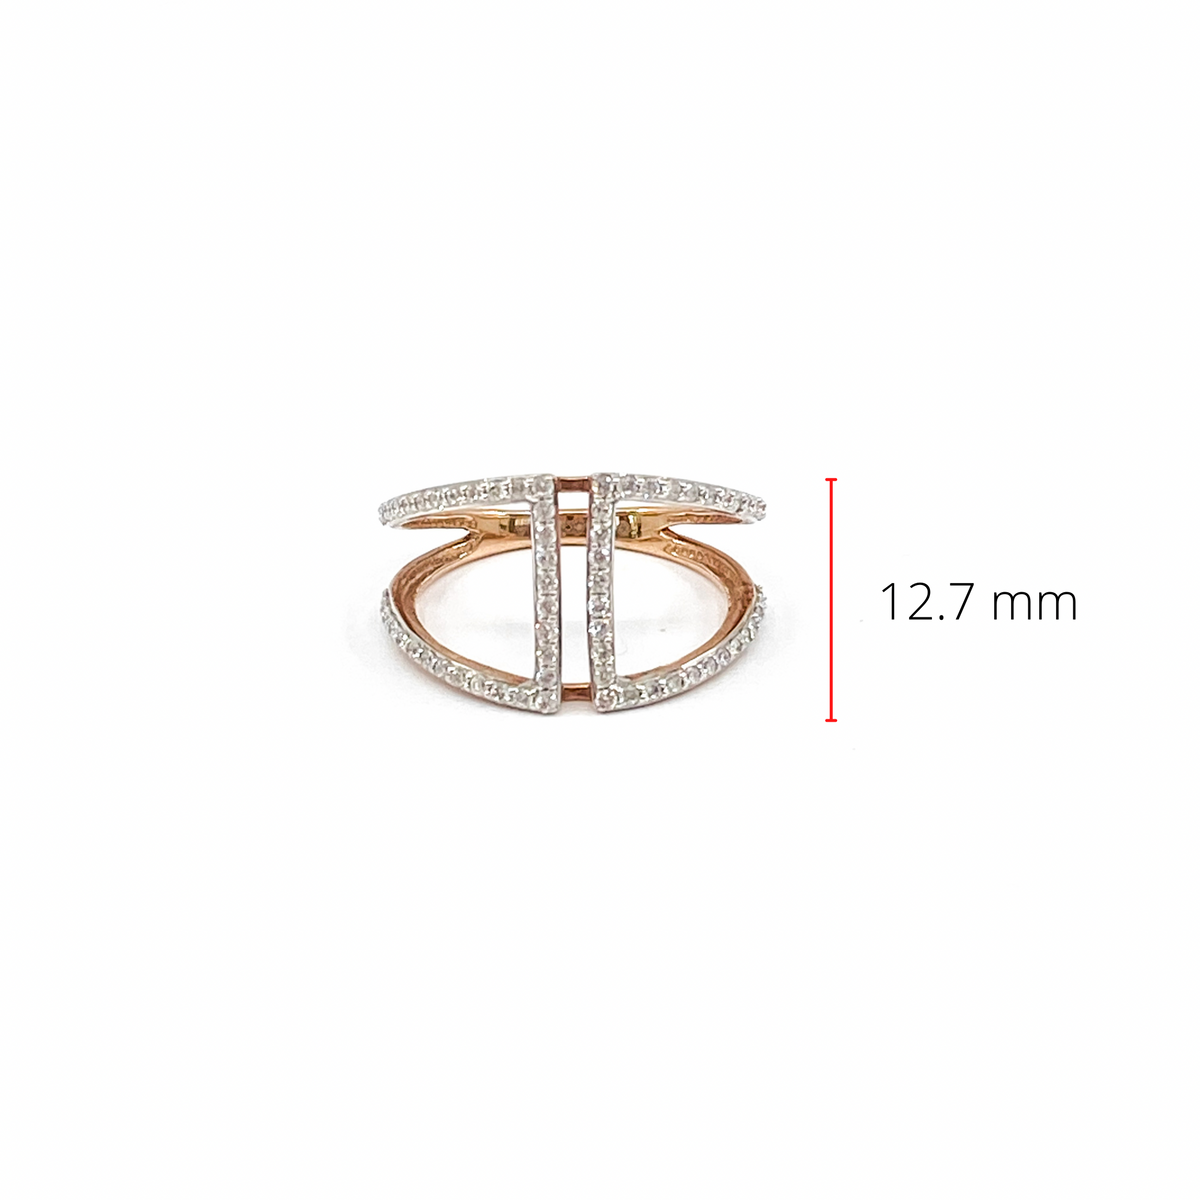 10K Rose Gold 0.40cttw Diamond Ring, size 6.5